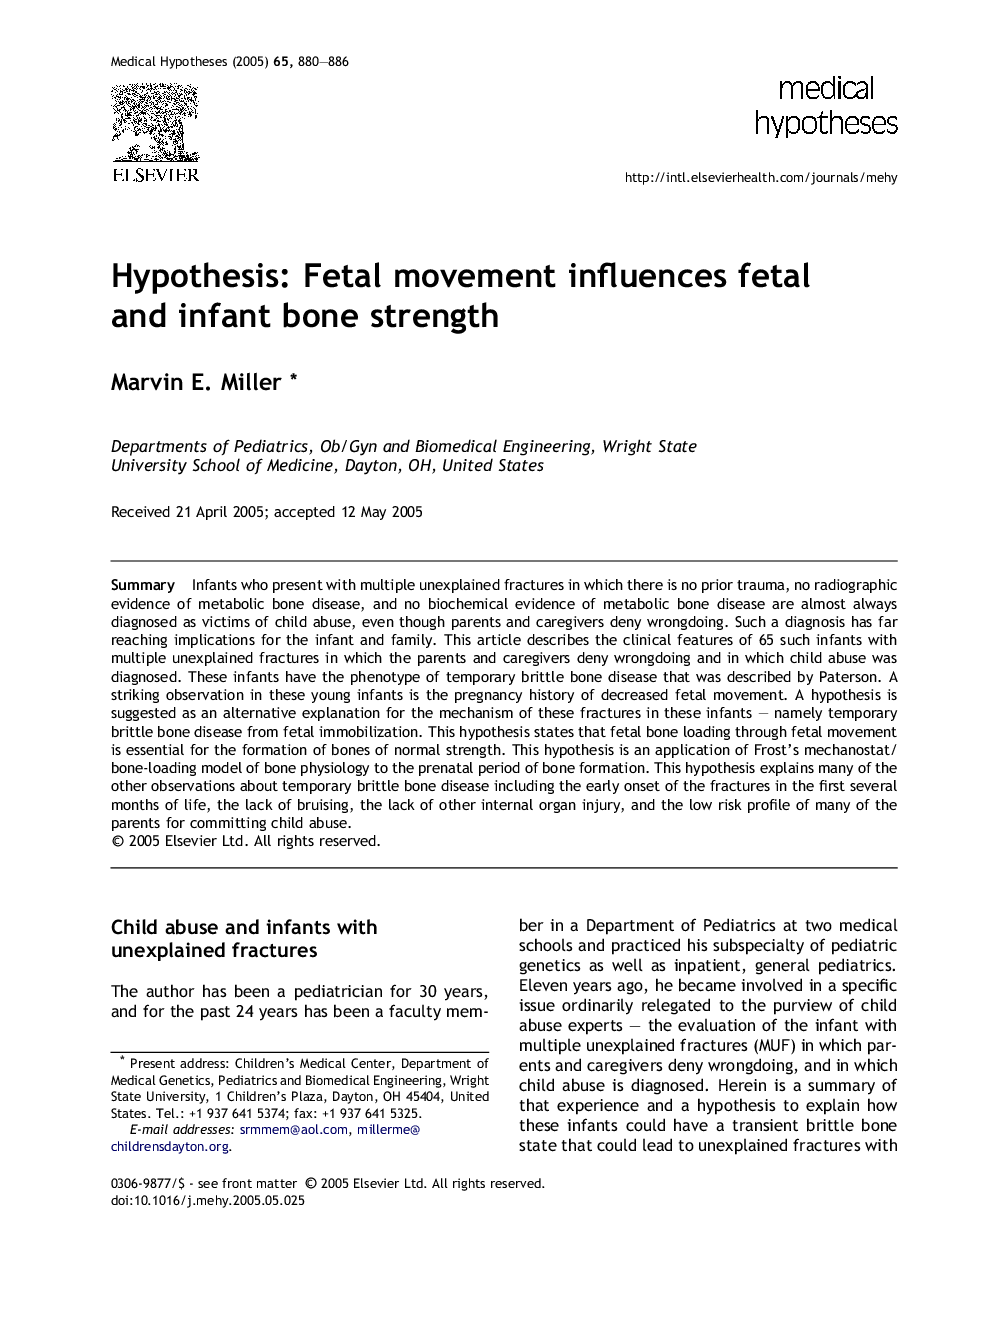 Hypothesis: Fetal movement influences fetal and infant bone strength